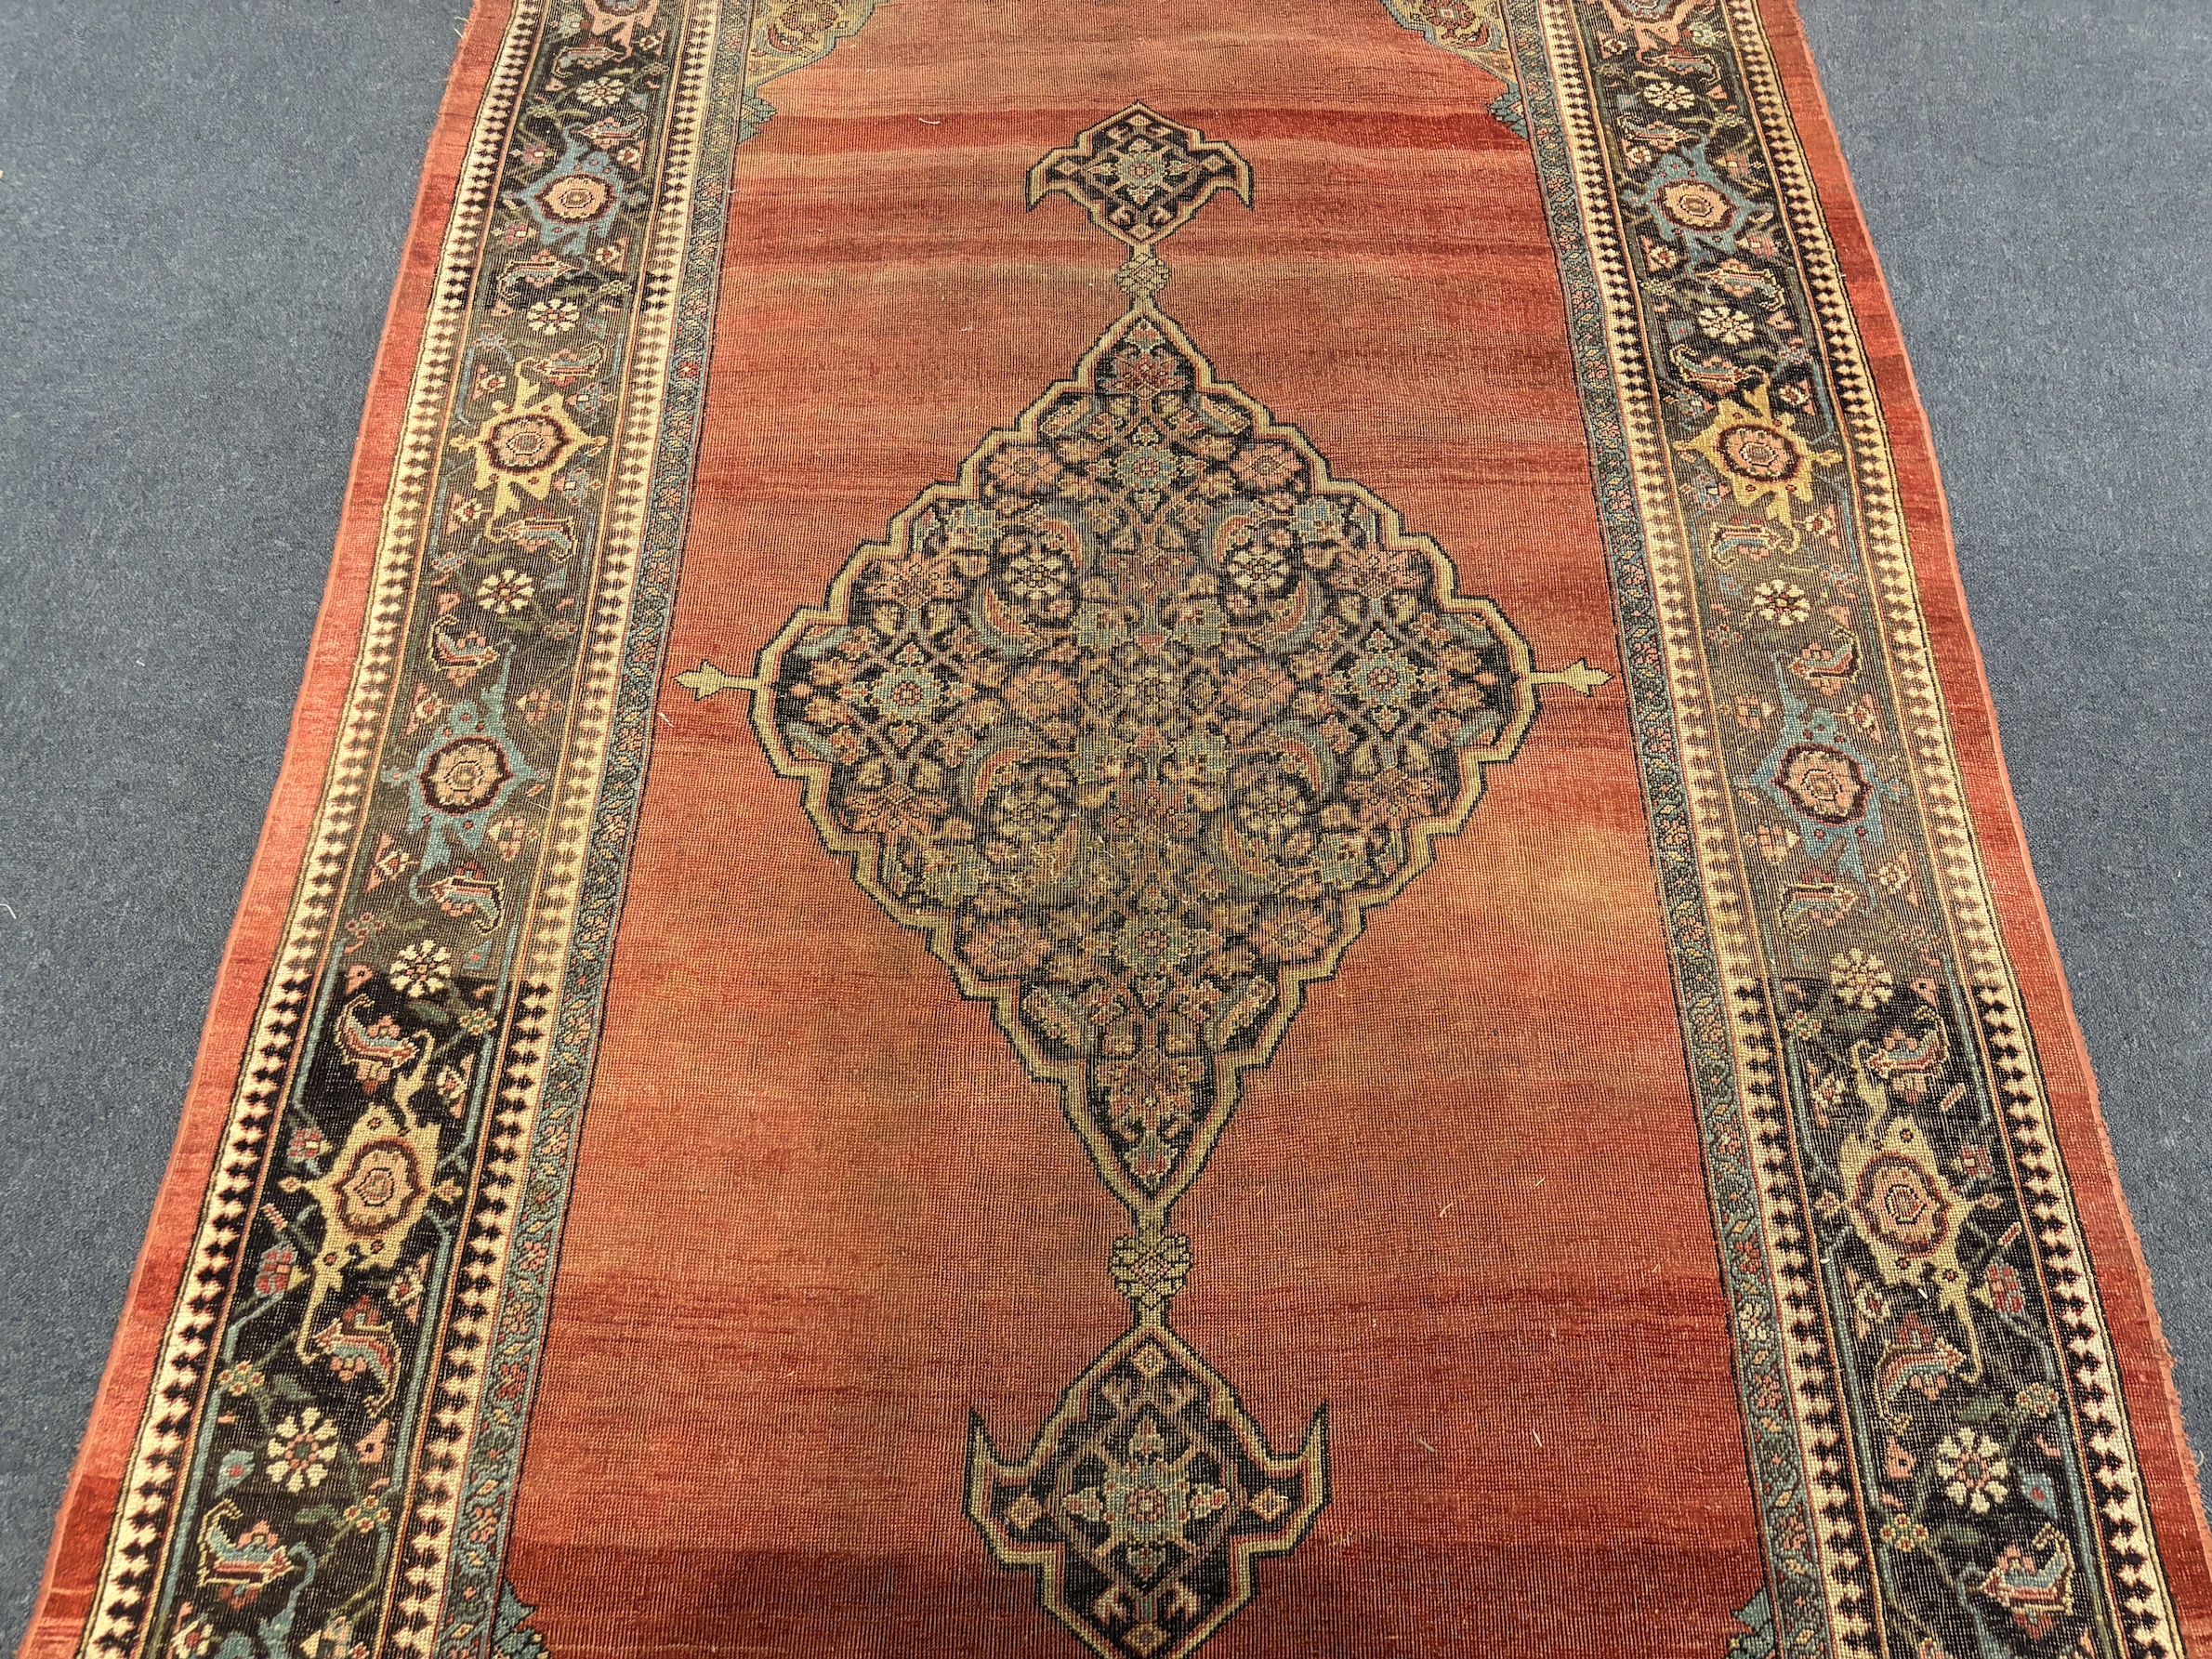 An antique Bidjar carpet 365 x 185cm